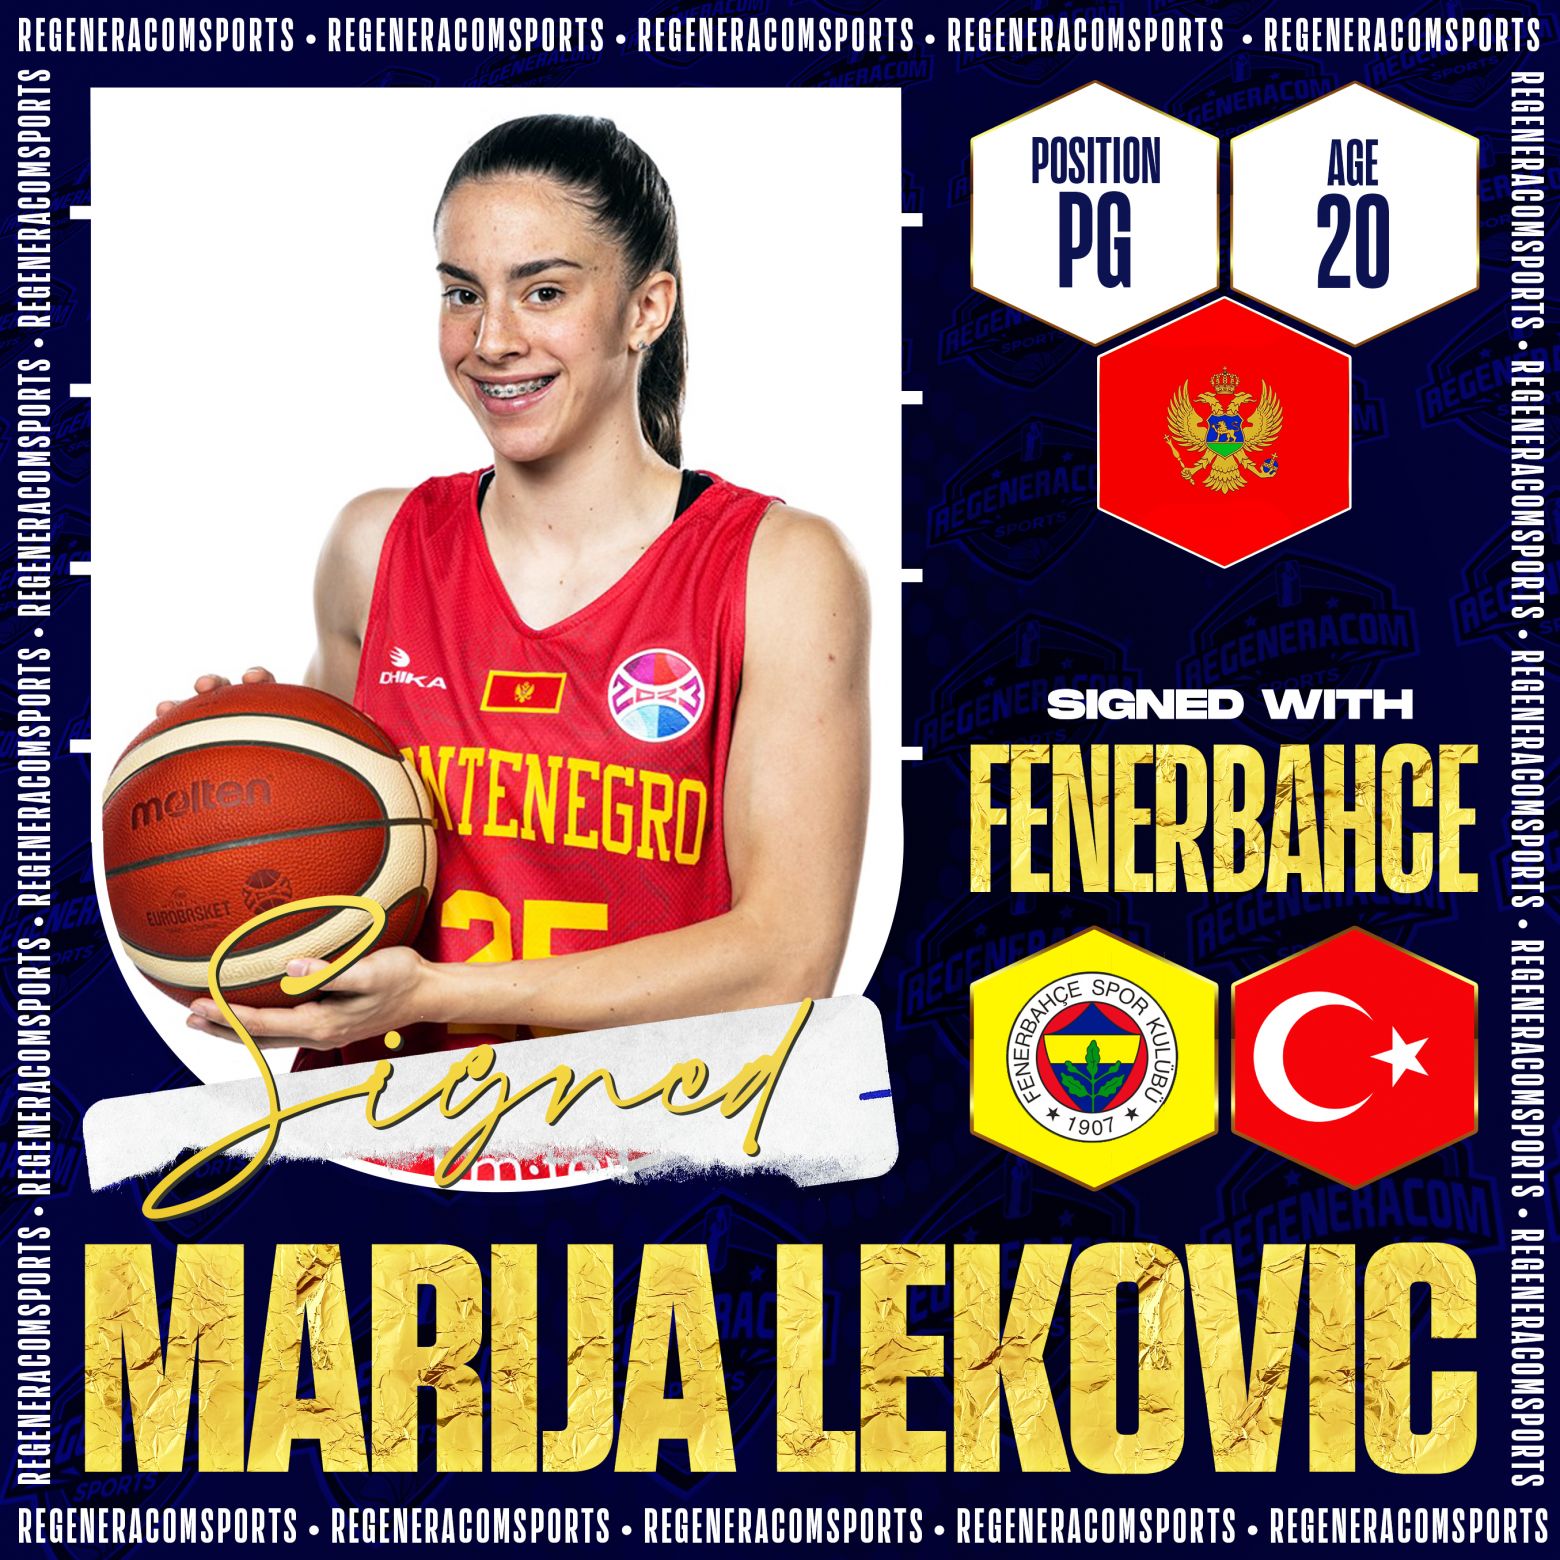 MARIJA LEKOVIC has signed with Fenerbahce for the next 3 seasons